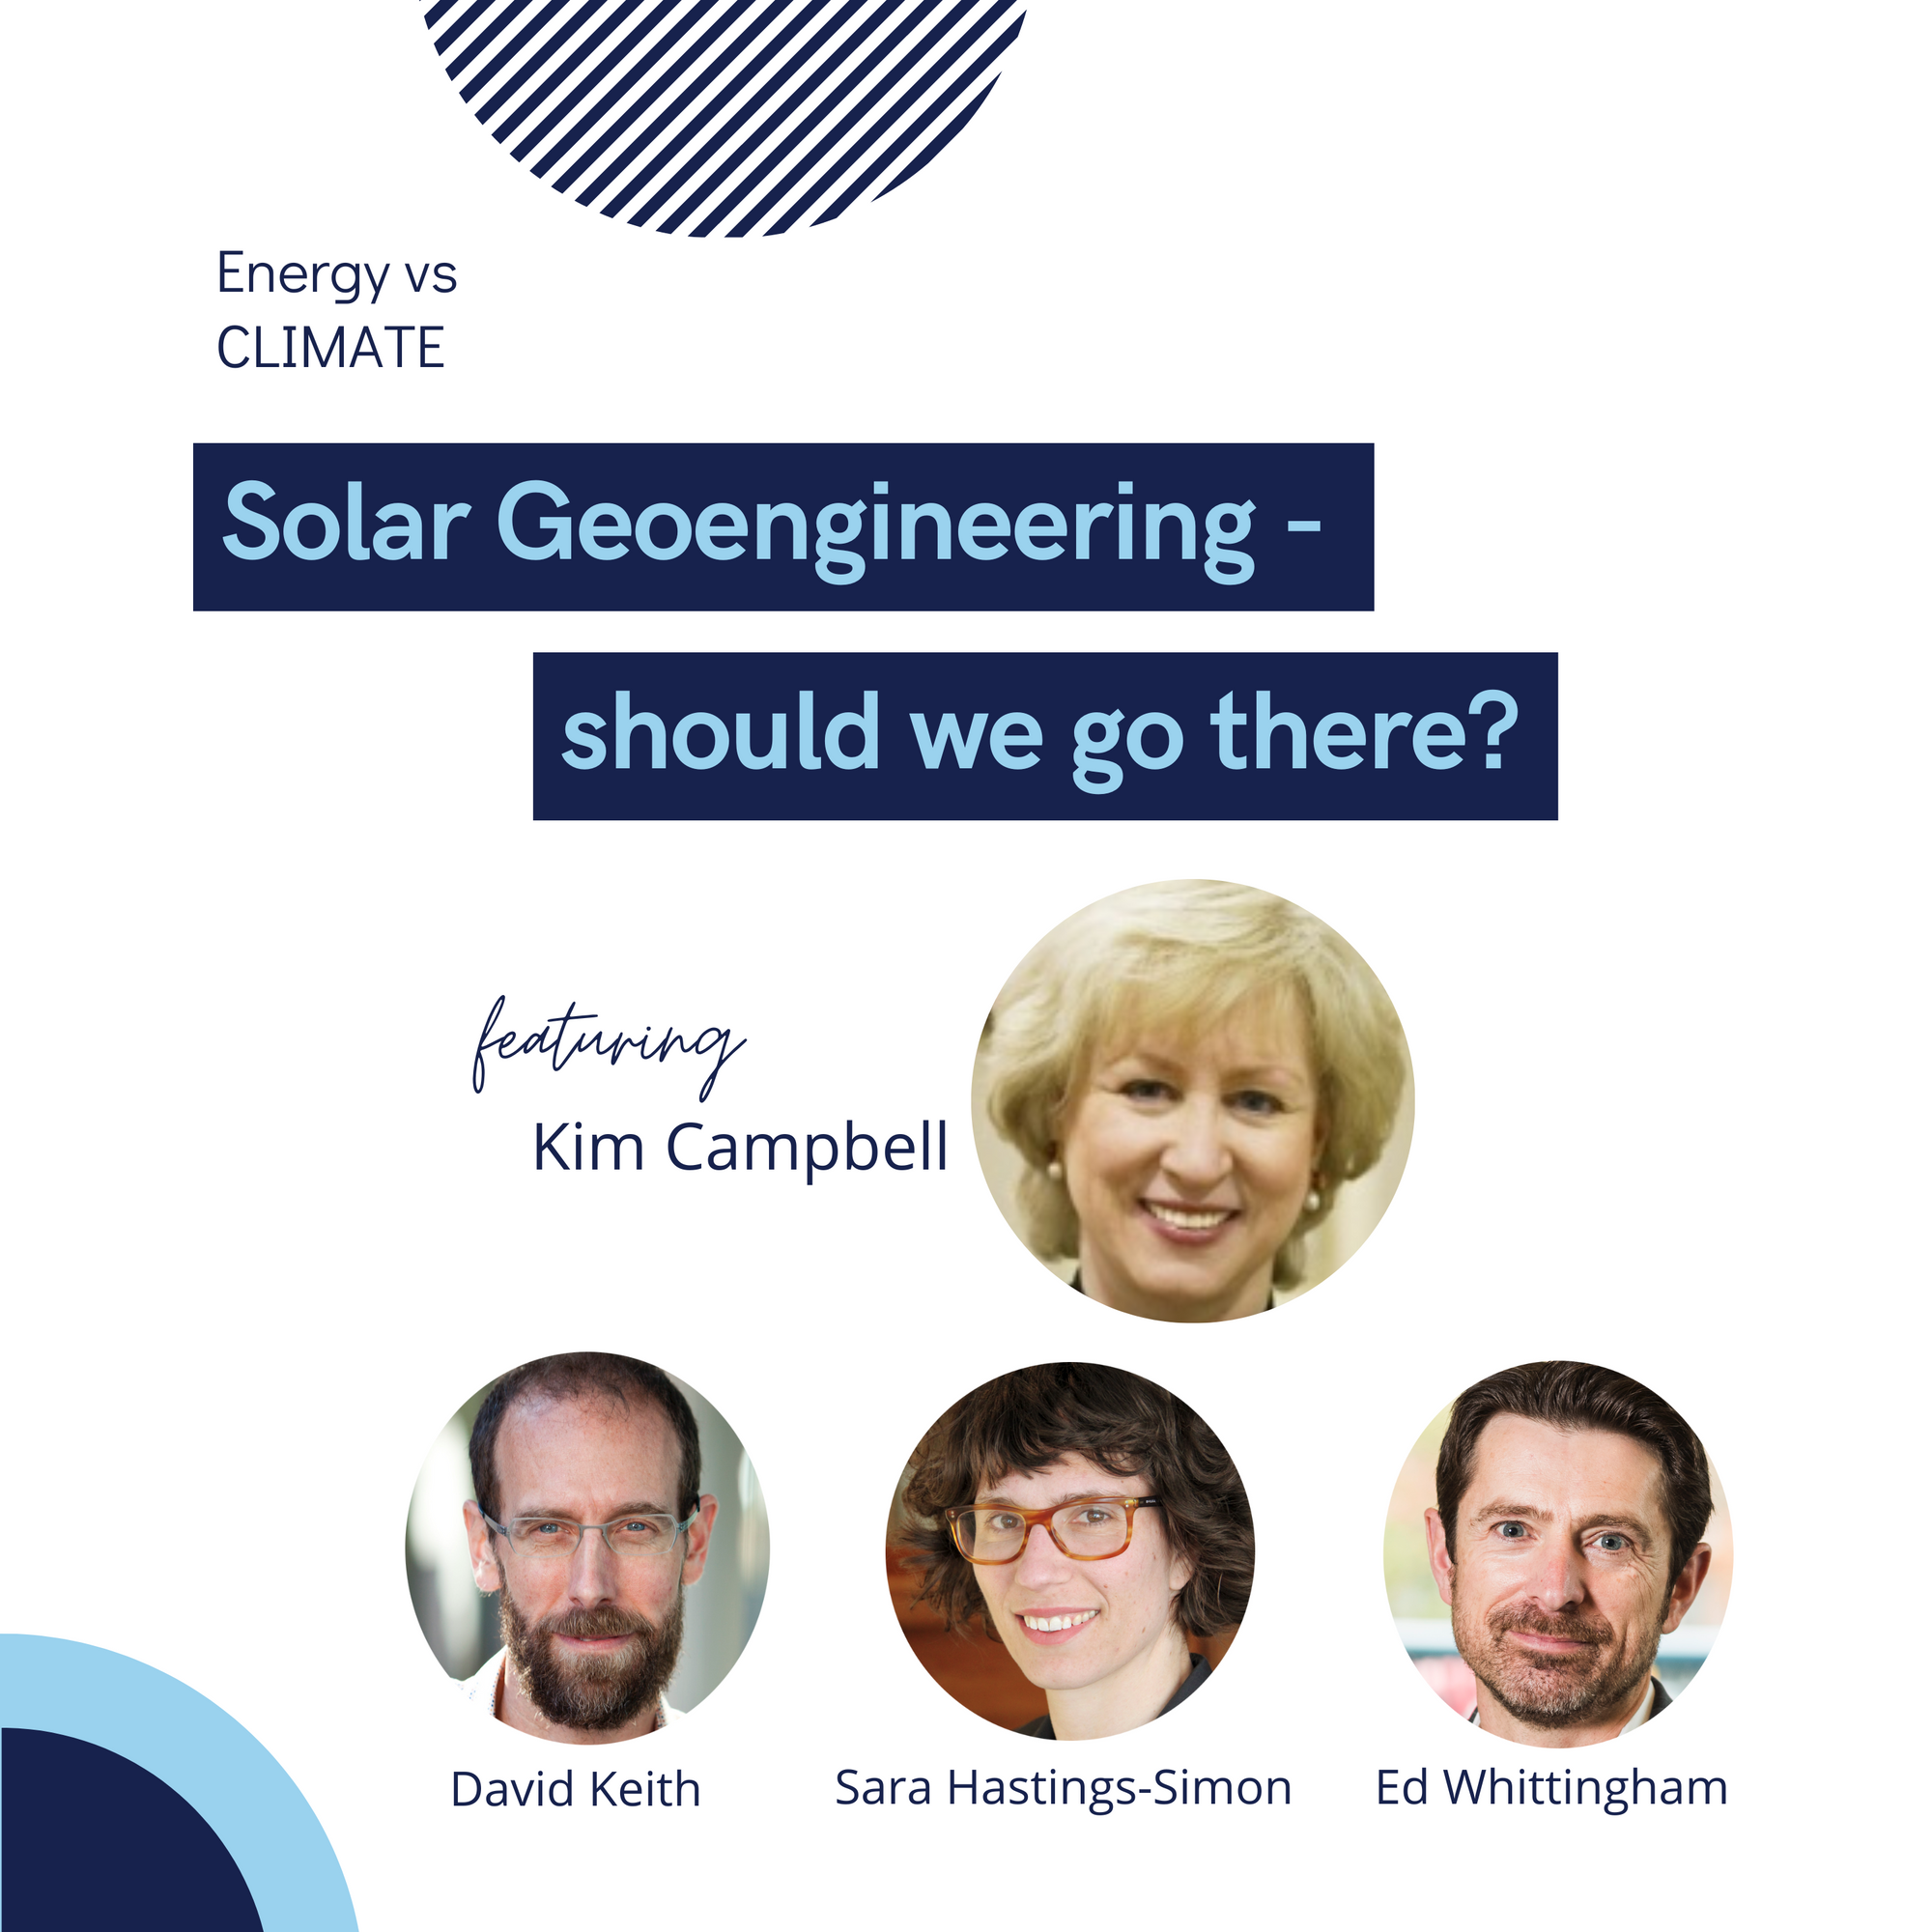 Solar Geoengineering - should we go there?